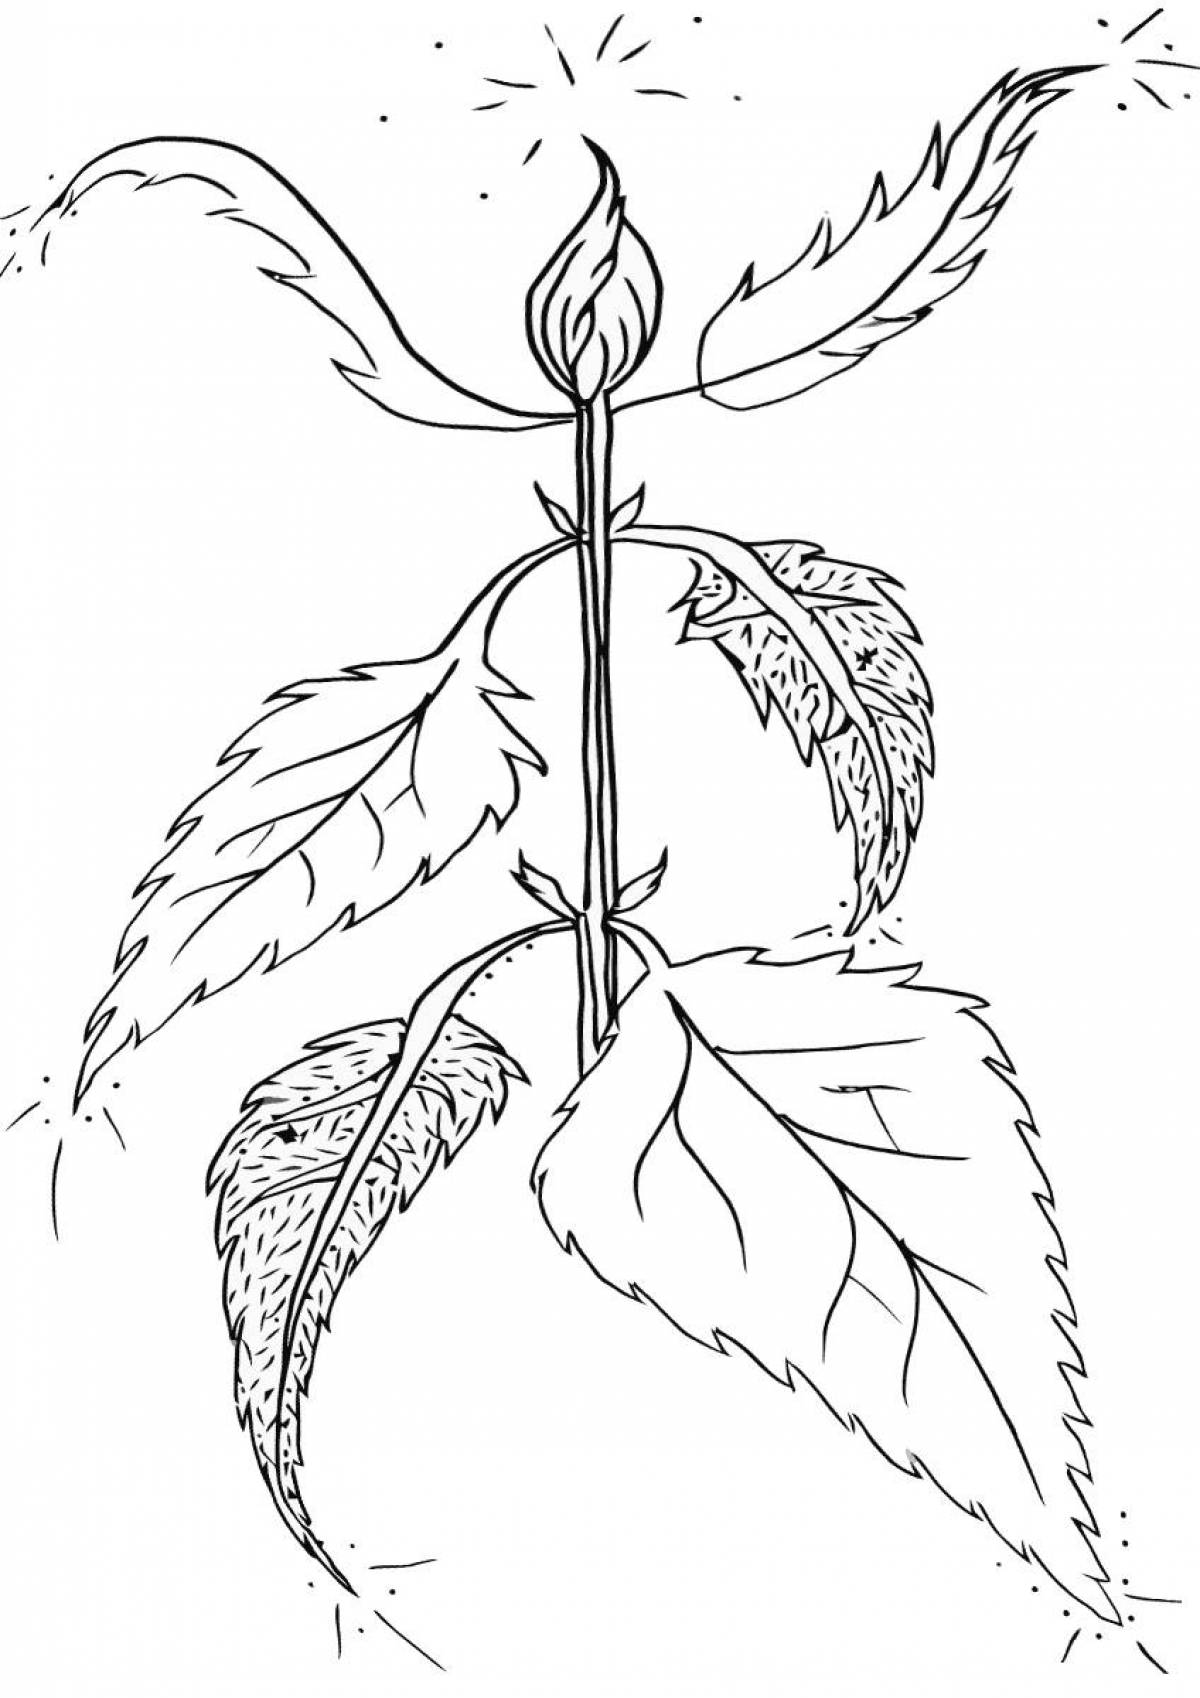 Nettle plant